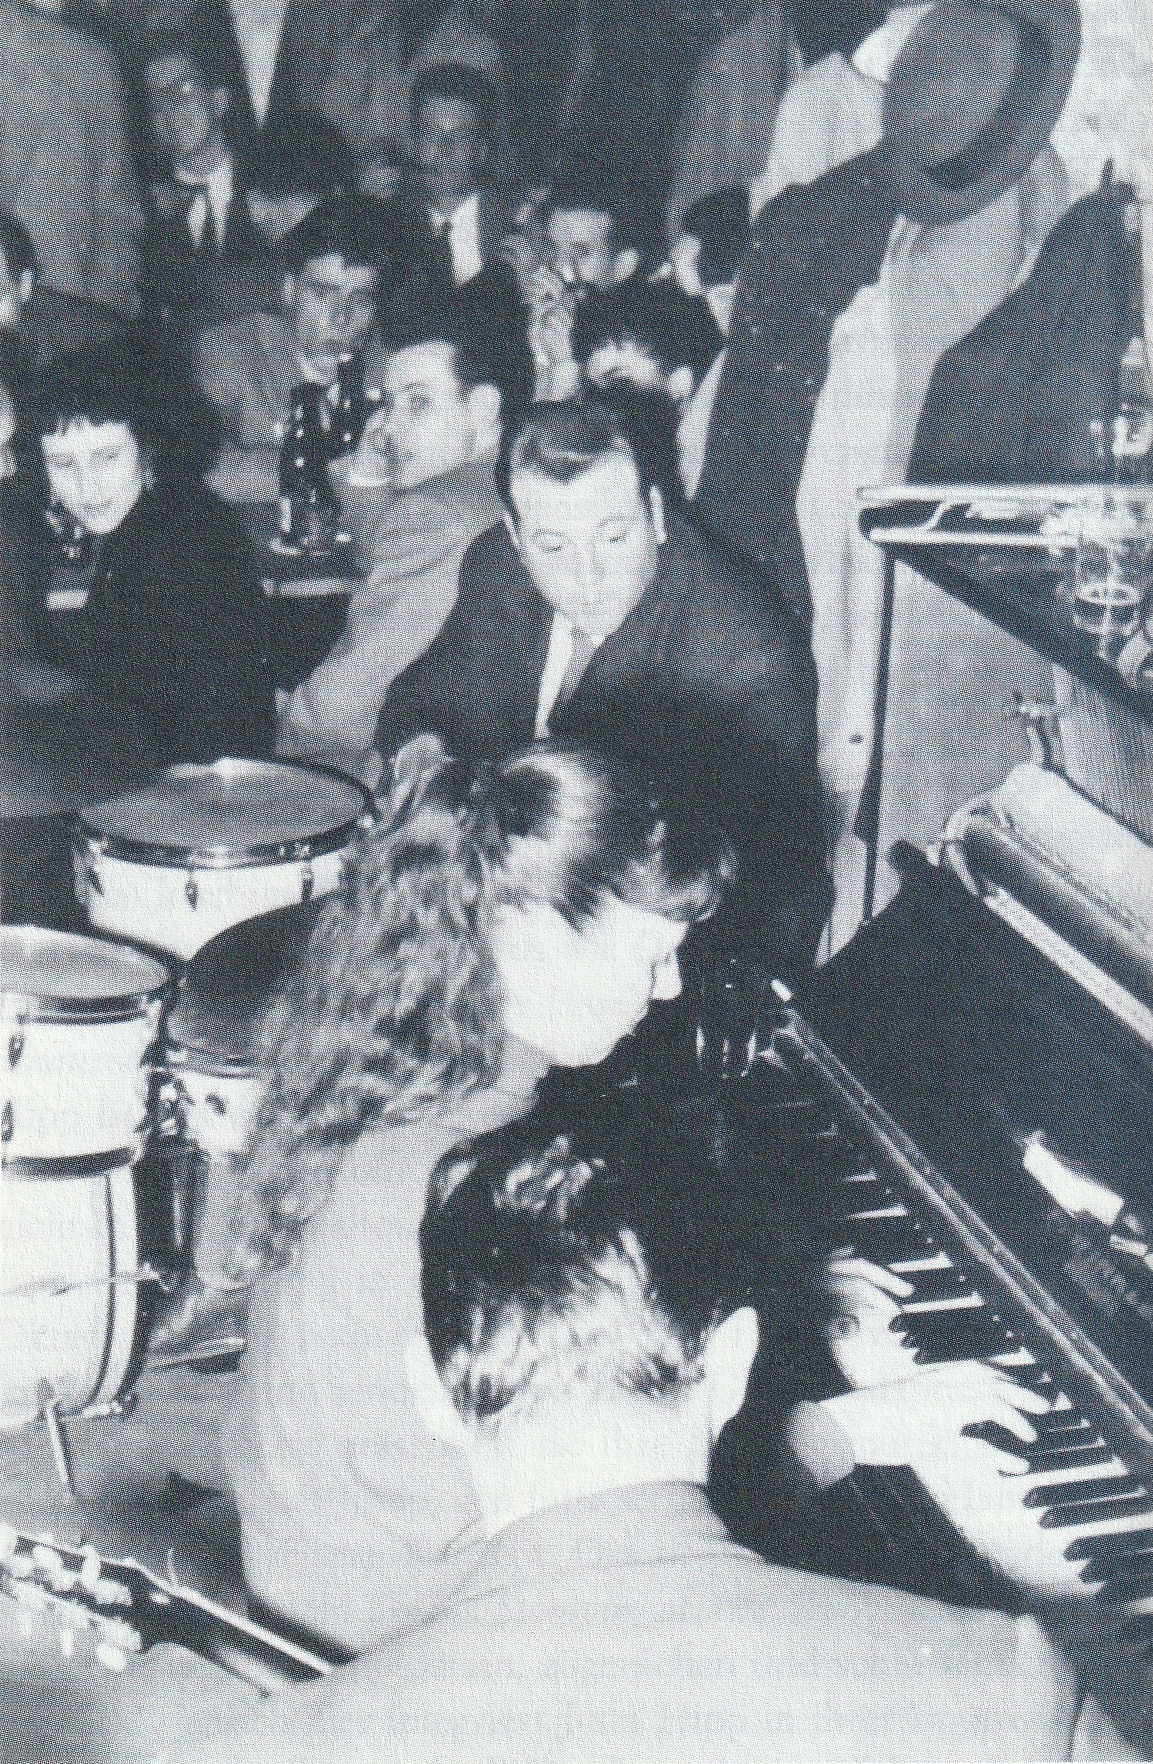 Jutta Hipp playing at the Jazzkeller, mid-late 1950s